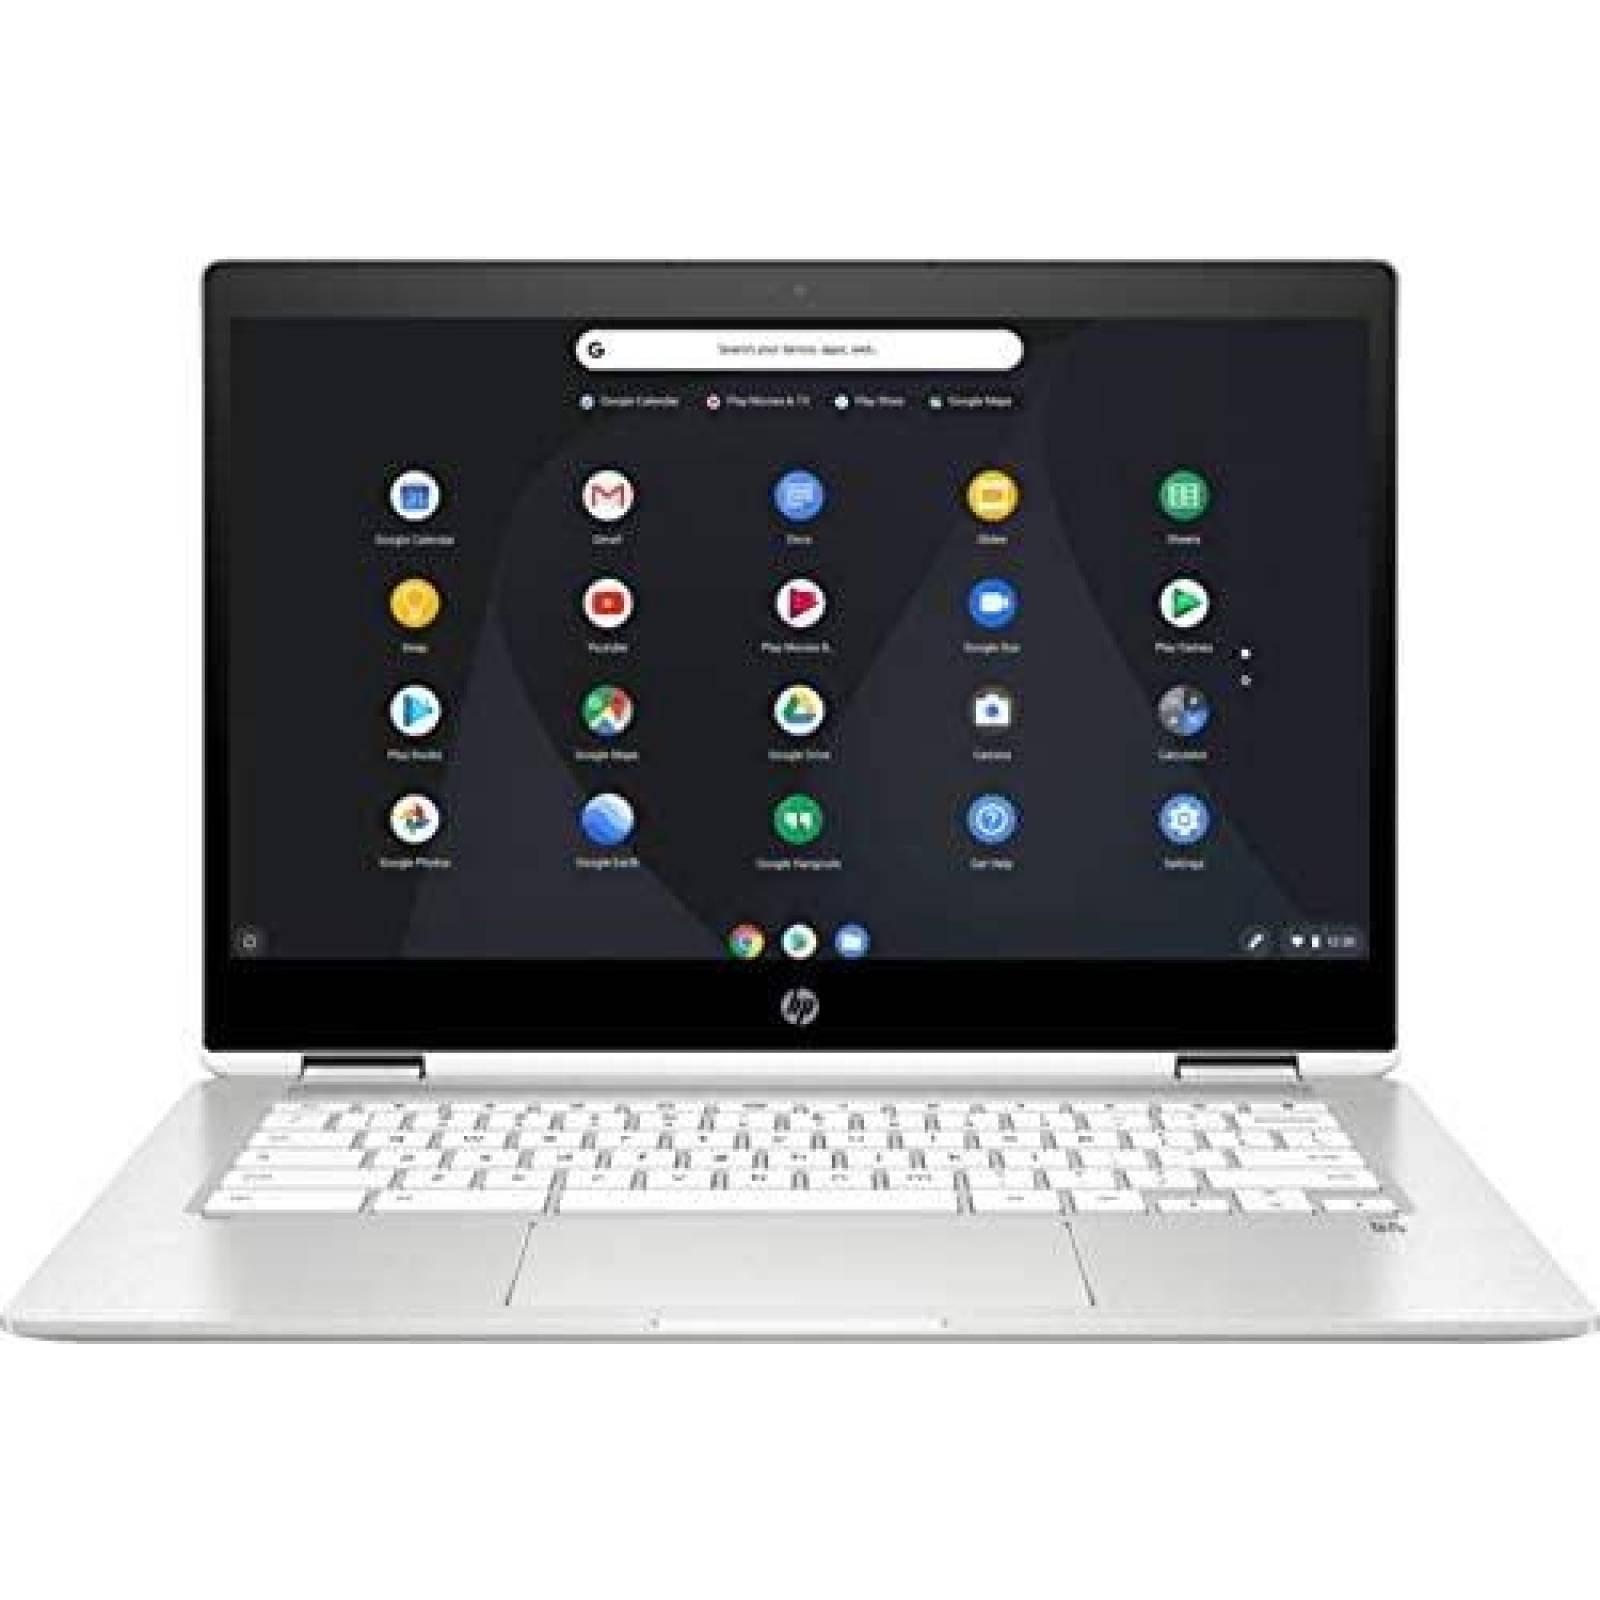 Laptop HP Chromebook 14'' 4GB Celeron N4000 + MicroSD 32GB